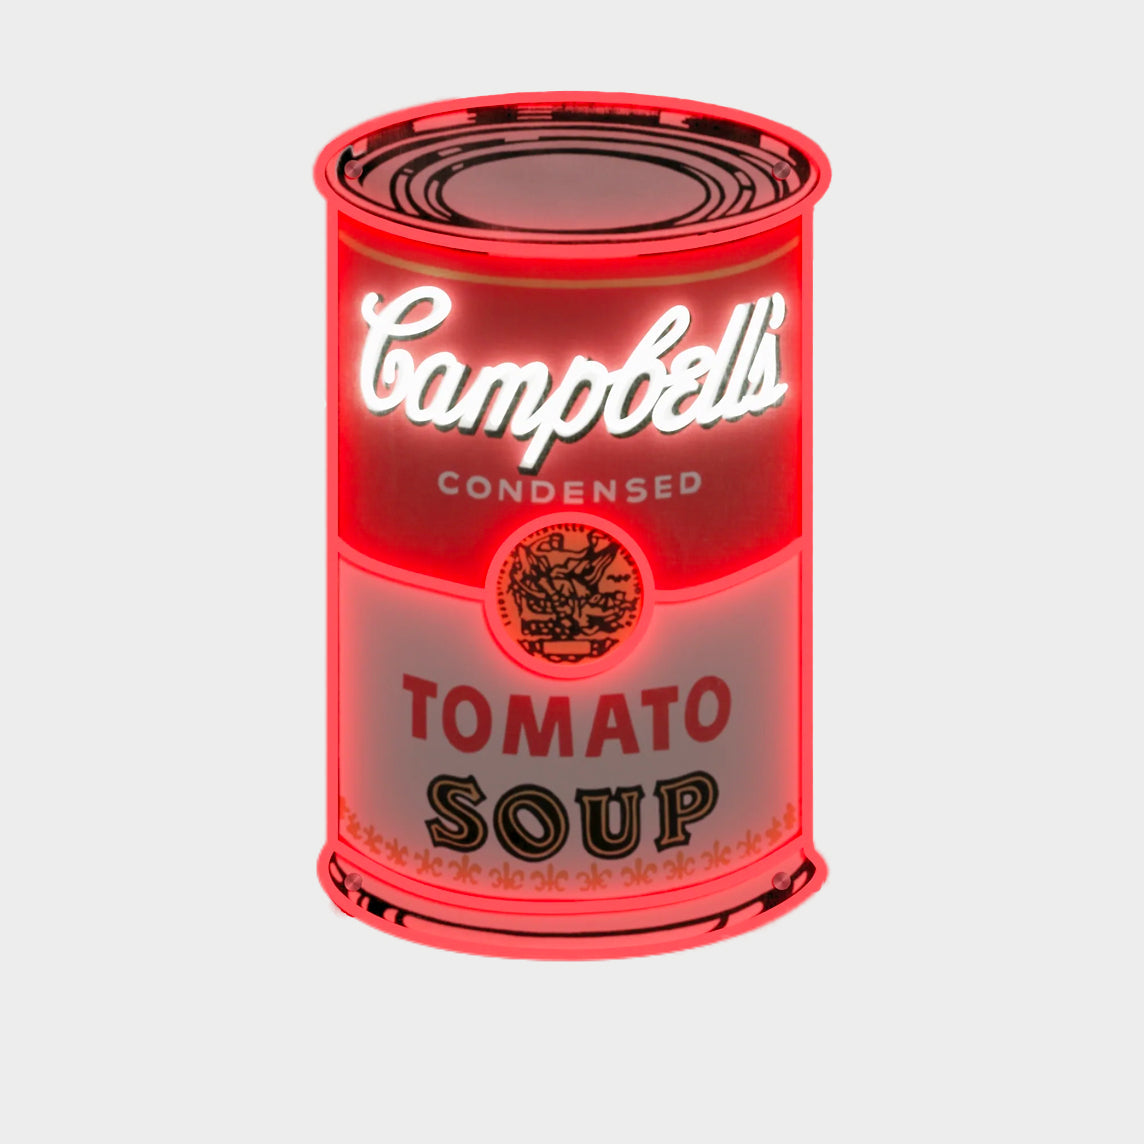 Yellowpop - 'Campbell's' - Andy Warhol LED Art